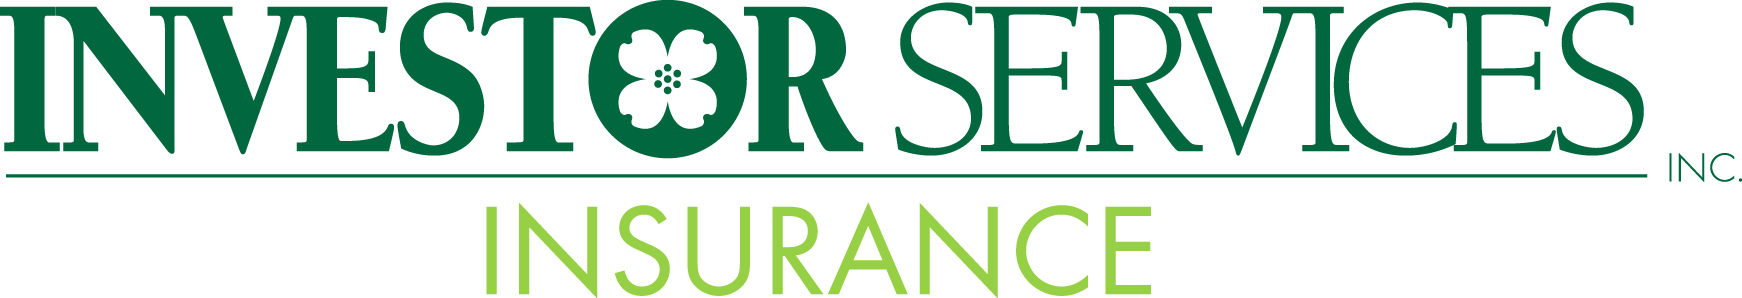 Investor Services Insurance Logo